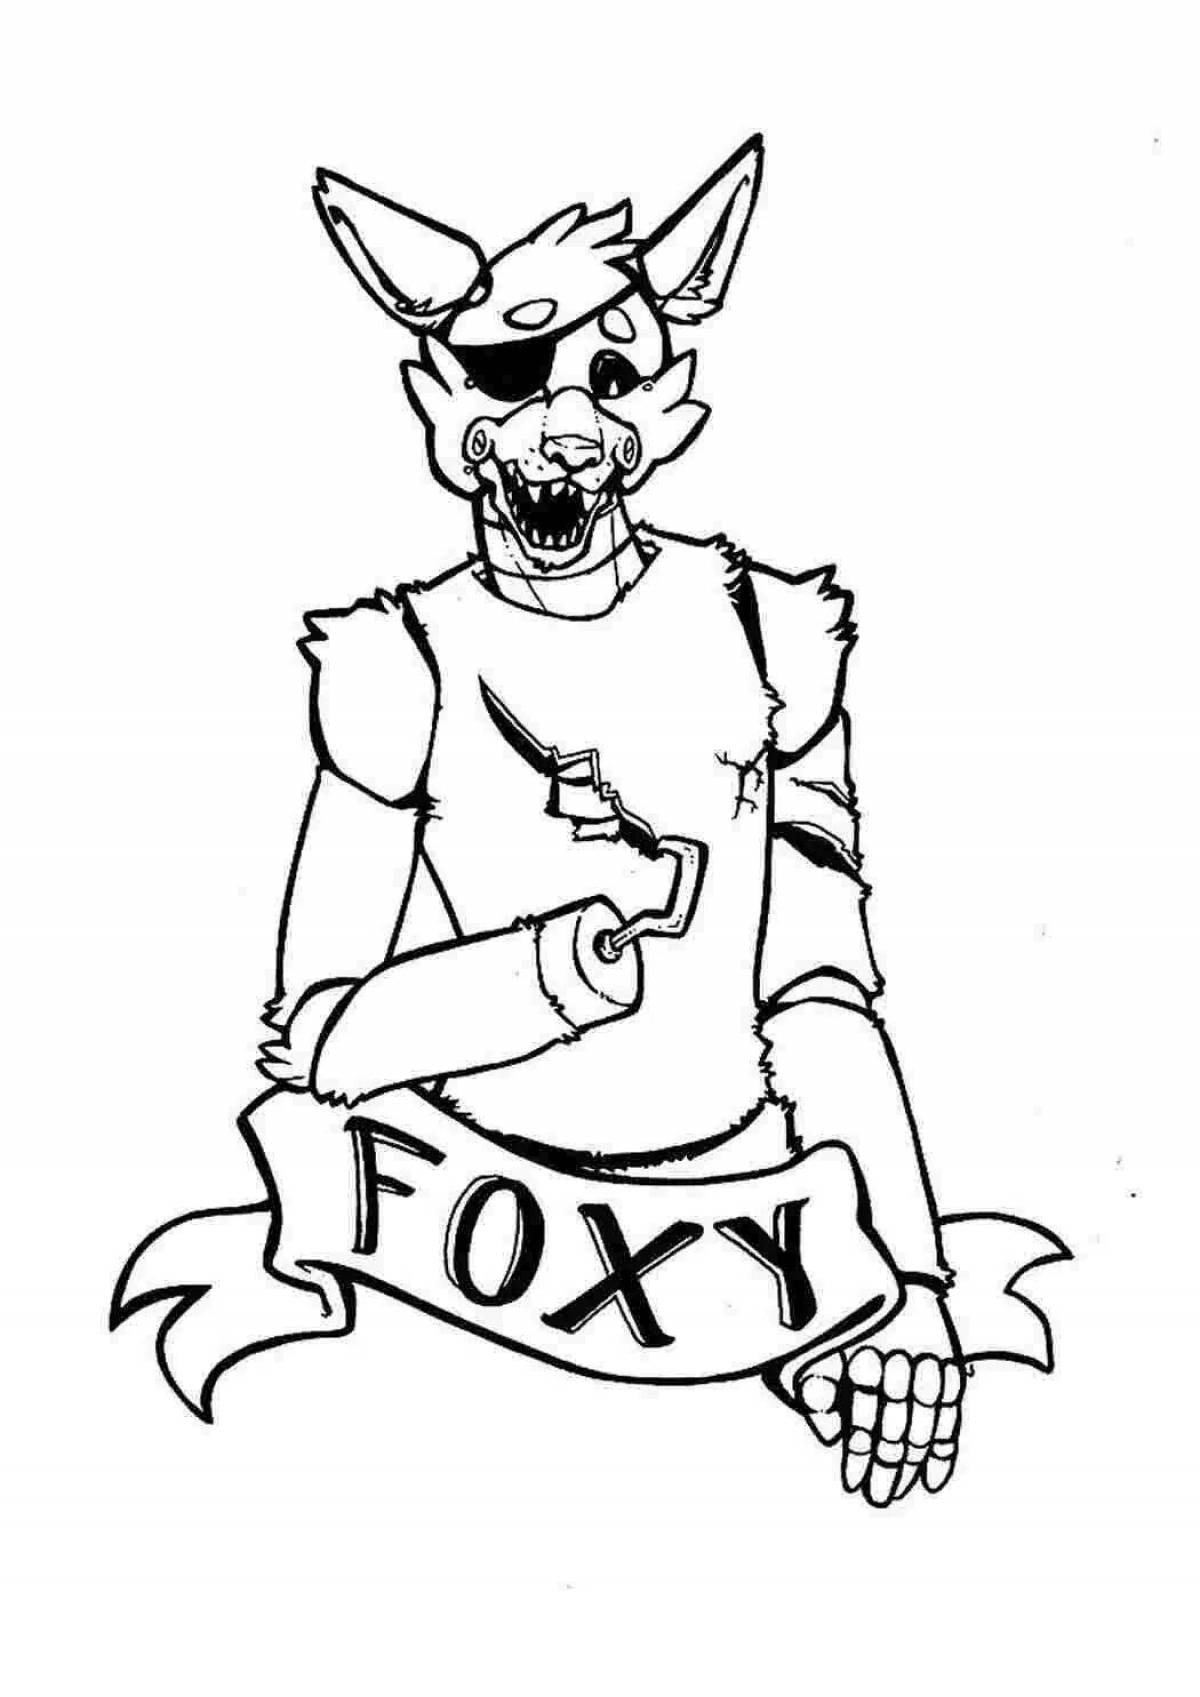 Fun fnaf foxy coloring book